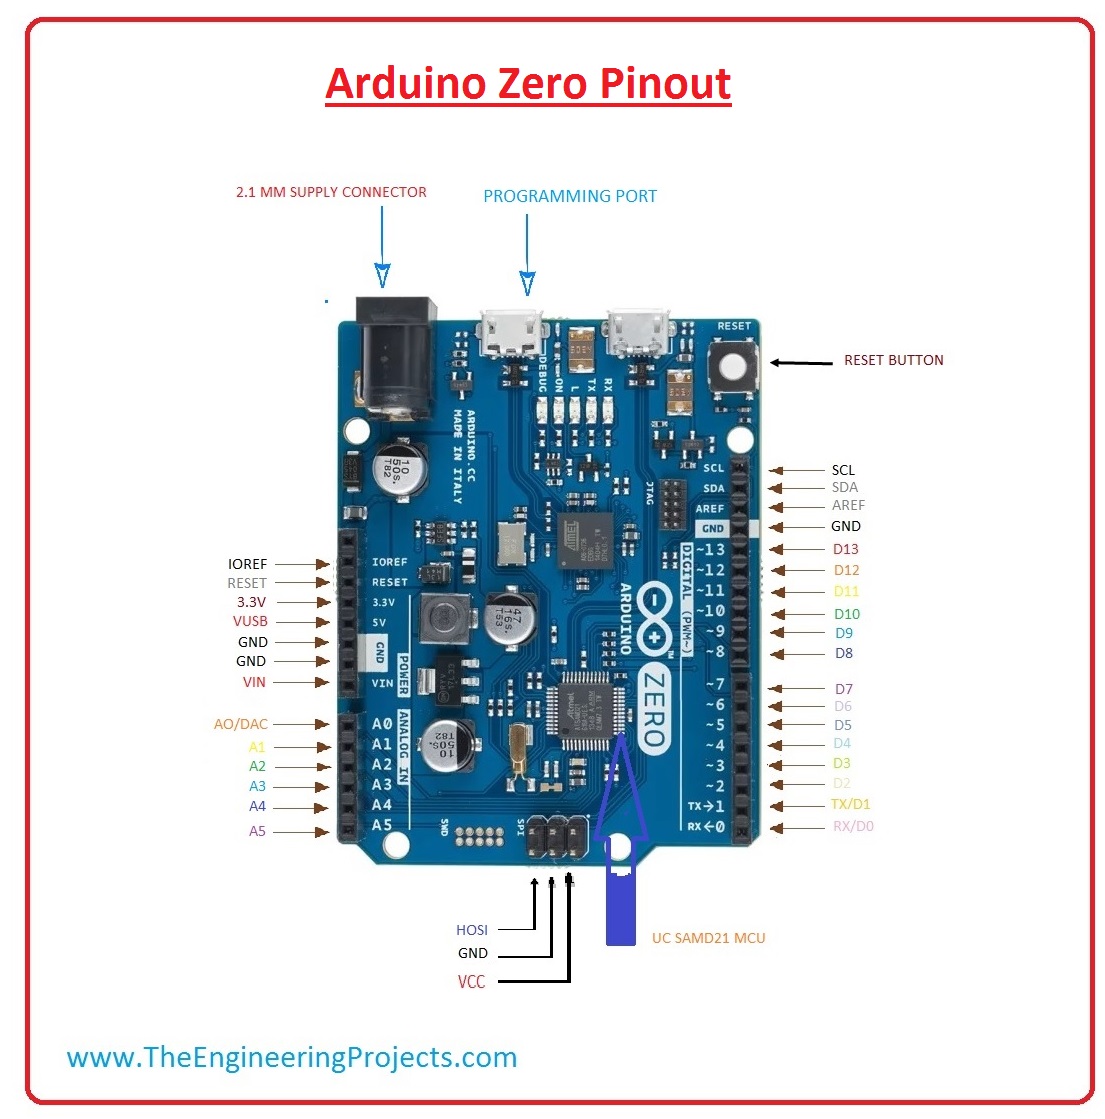 introduction to arduino zero, arduino zero pinout, arduino zero specifications, arduino zero application, arduino zero